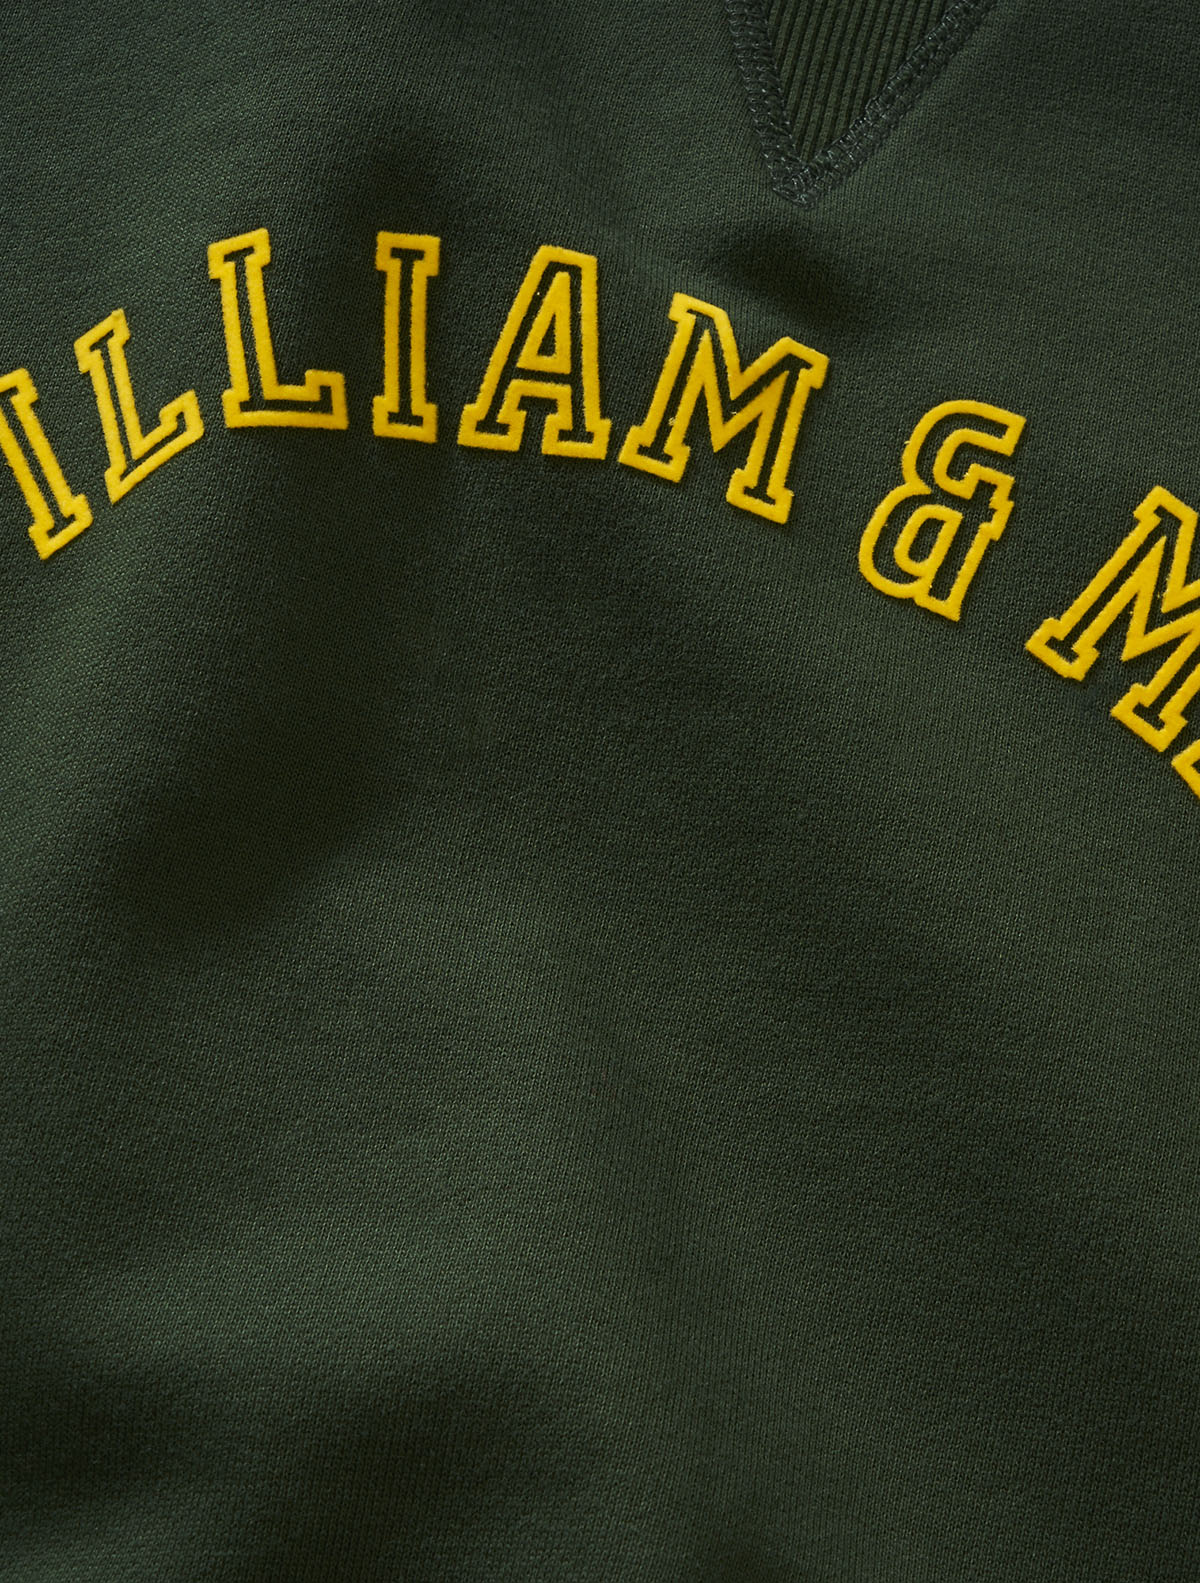 william and mary crewneck sweatshirt